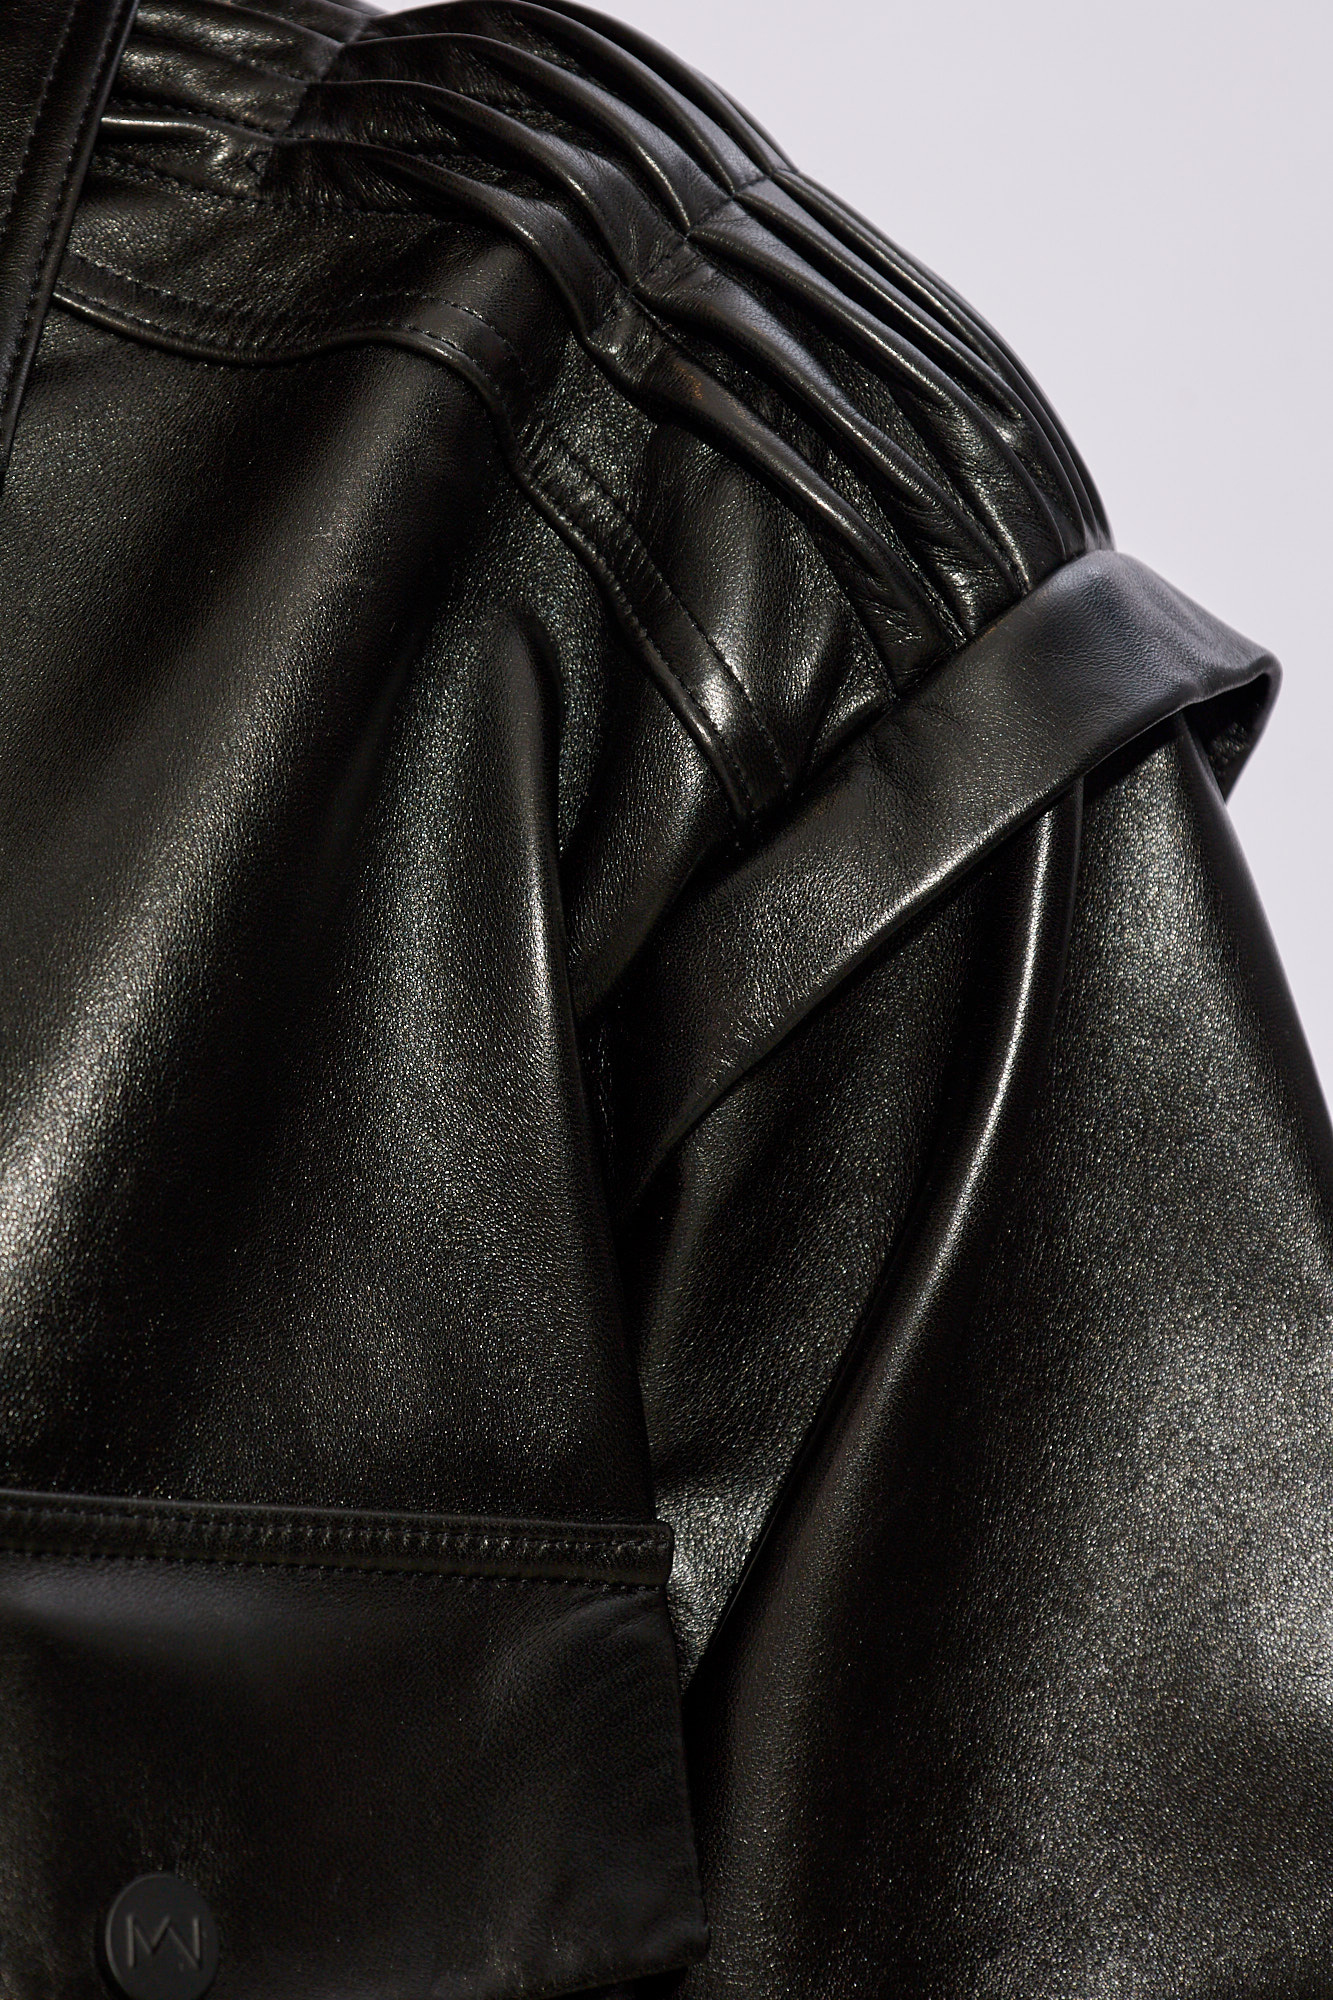 The Mannei ‘Turku’ leather jacket